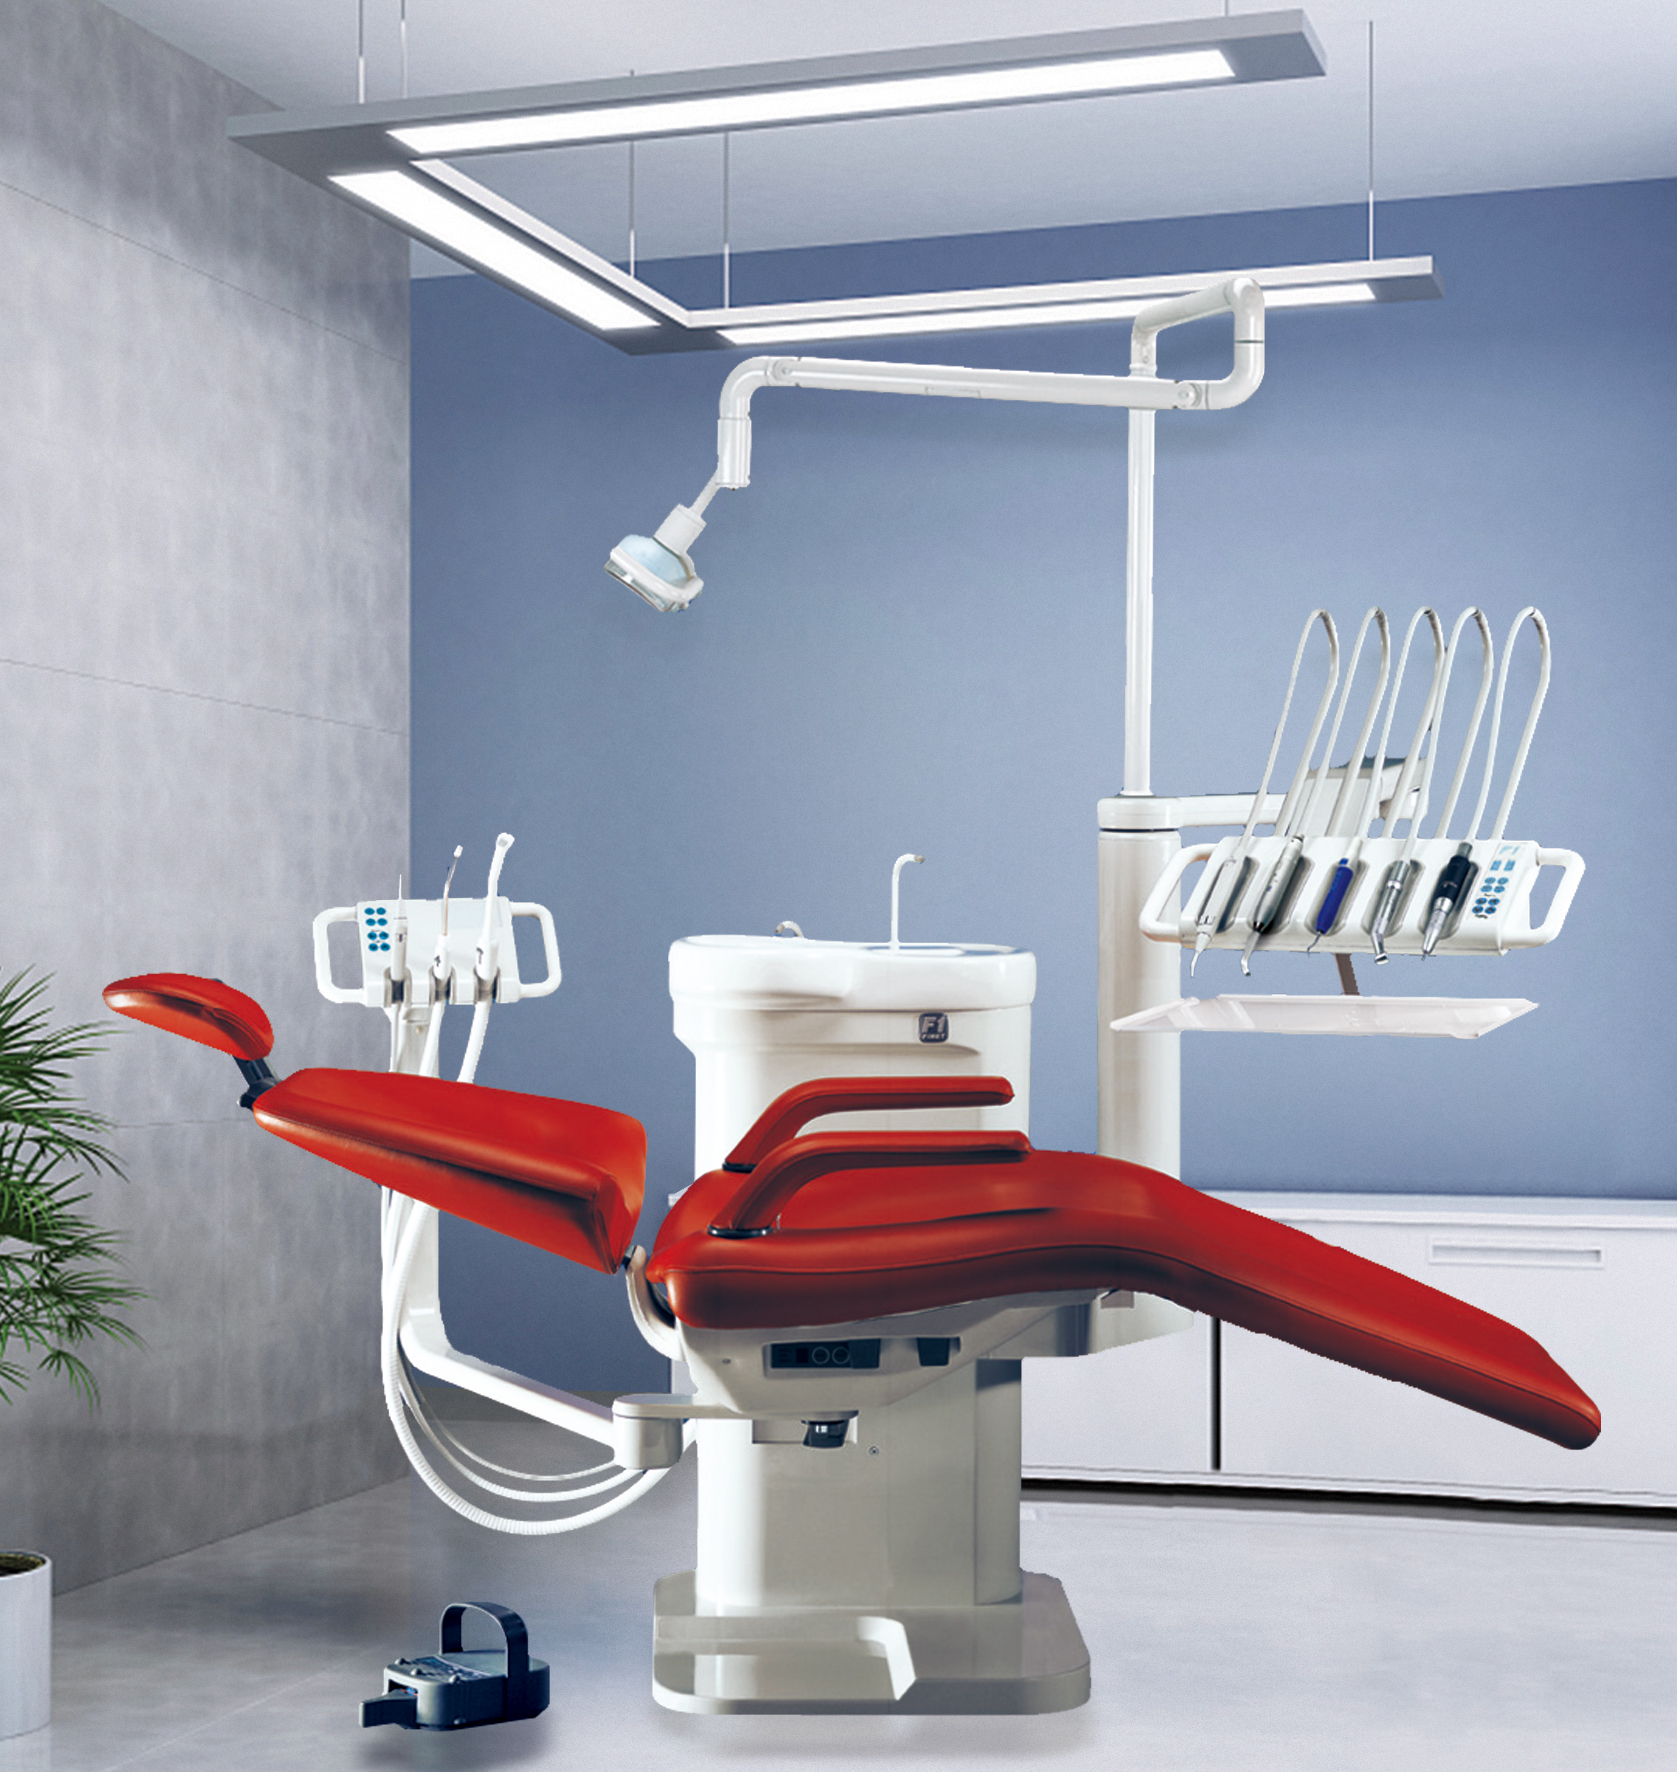 Machine-mounted dental unit